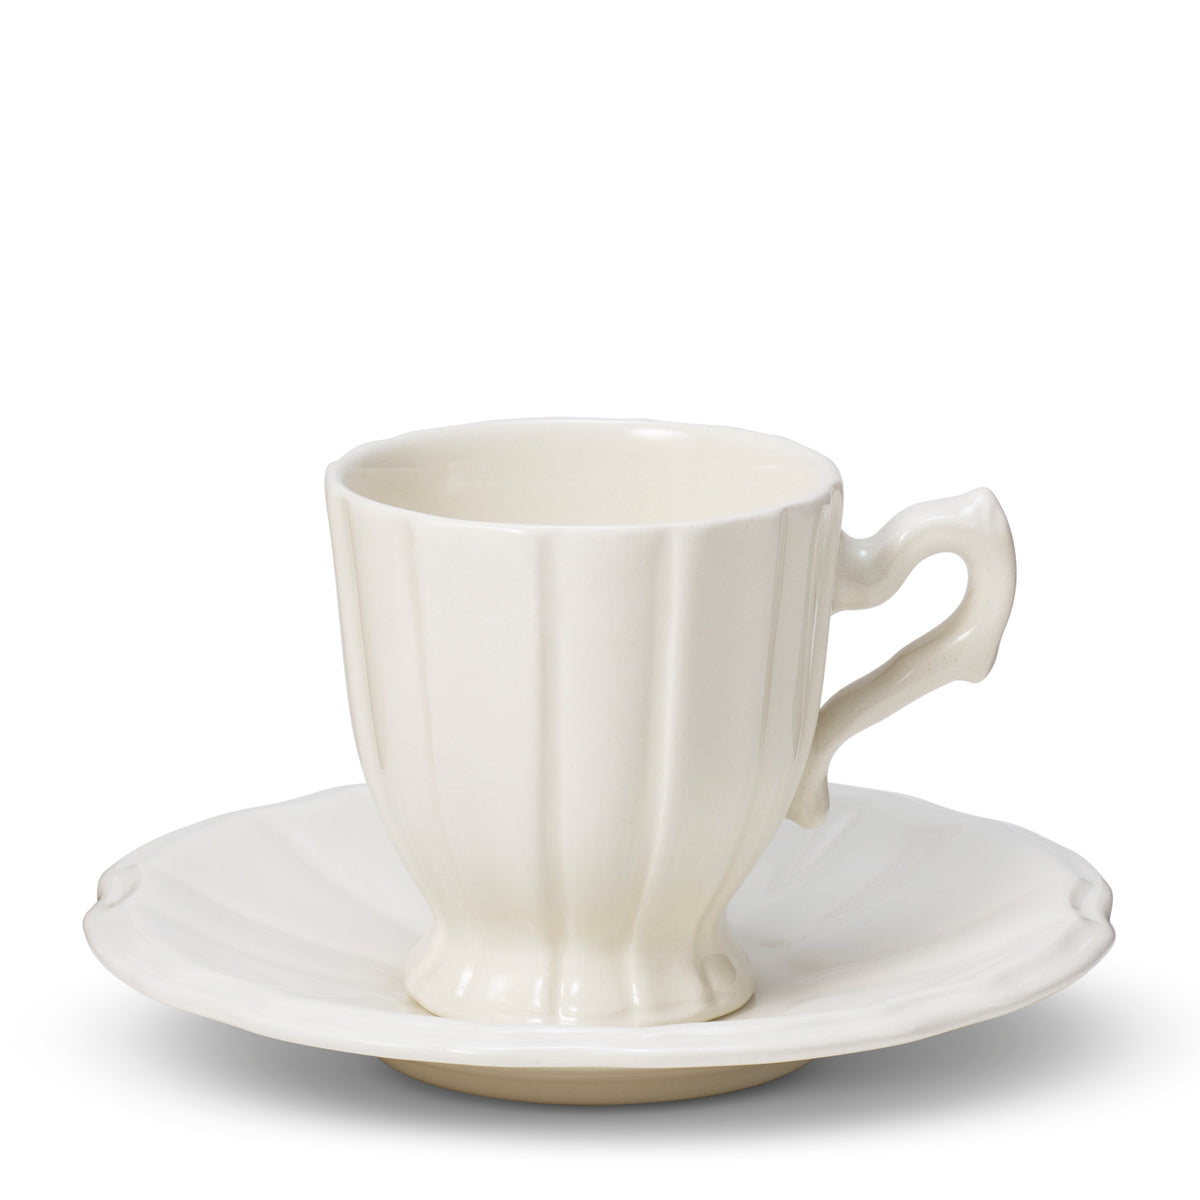 Arno Espresso Cup and Saucer in Cream